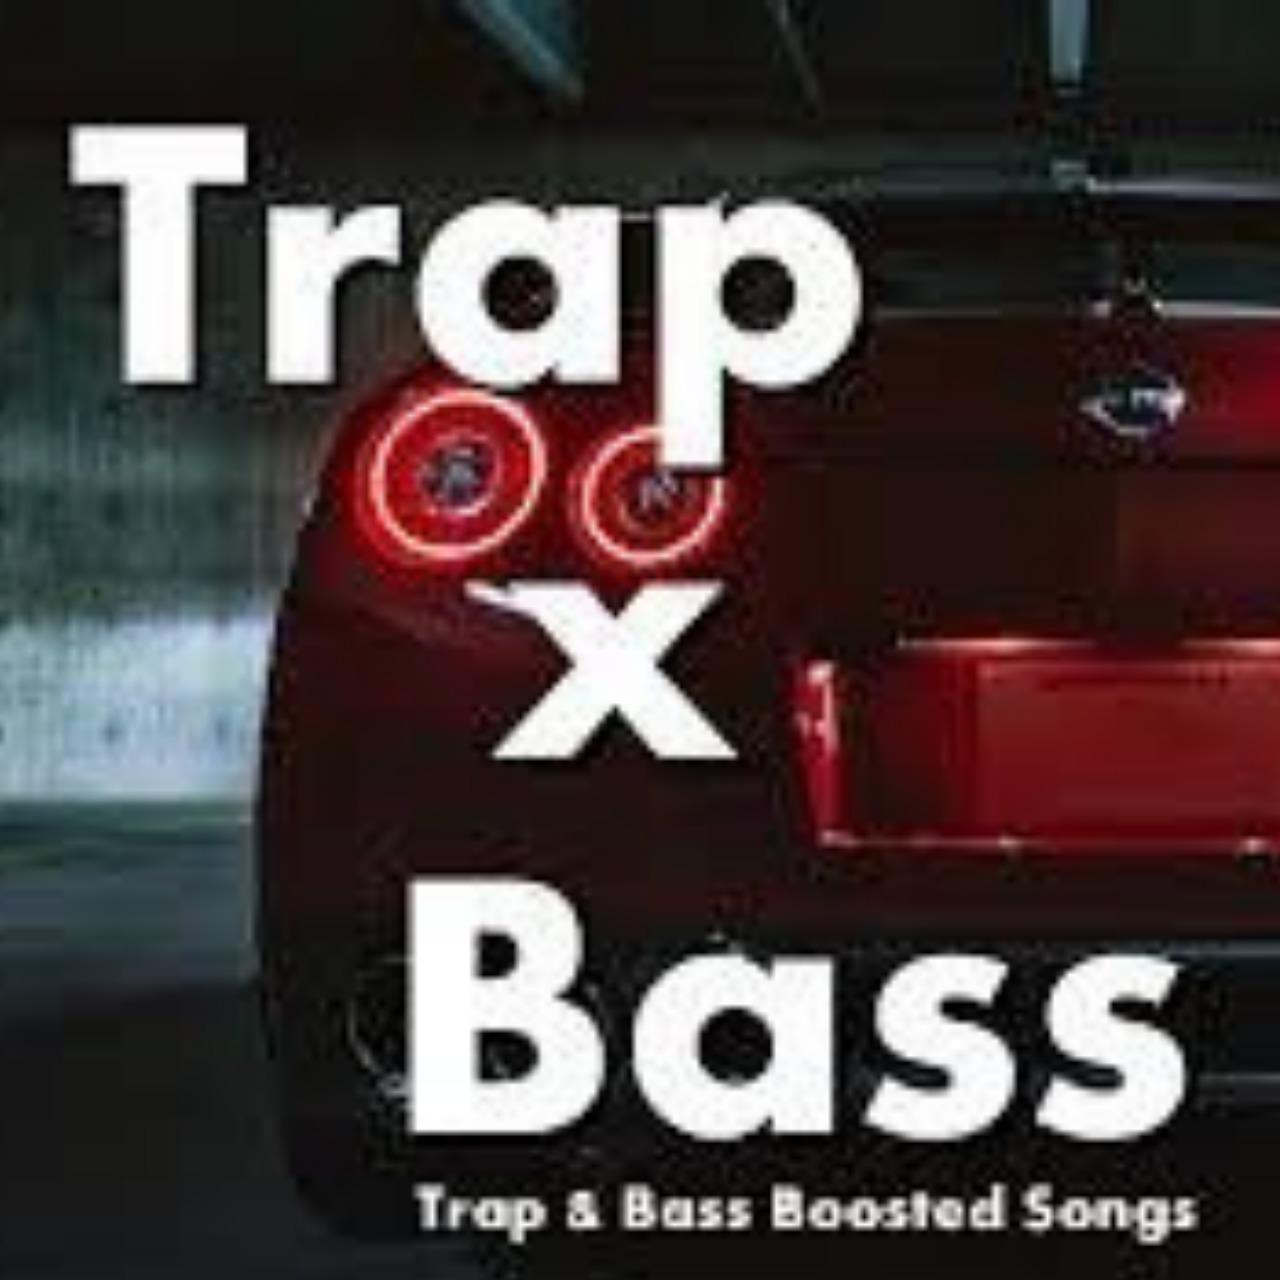 Trap Music Mix & Bass Boosted Extreme для Андроид - скачать APK